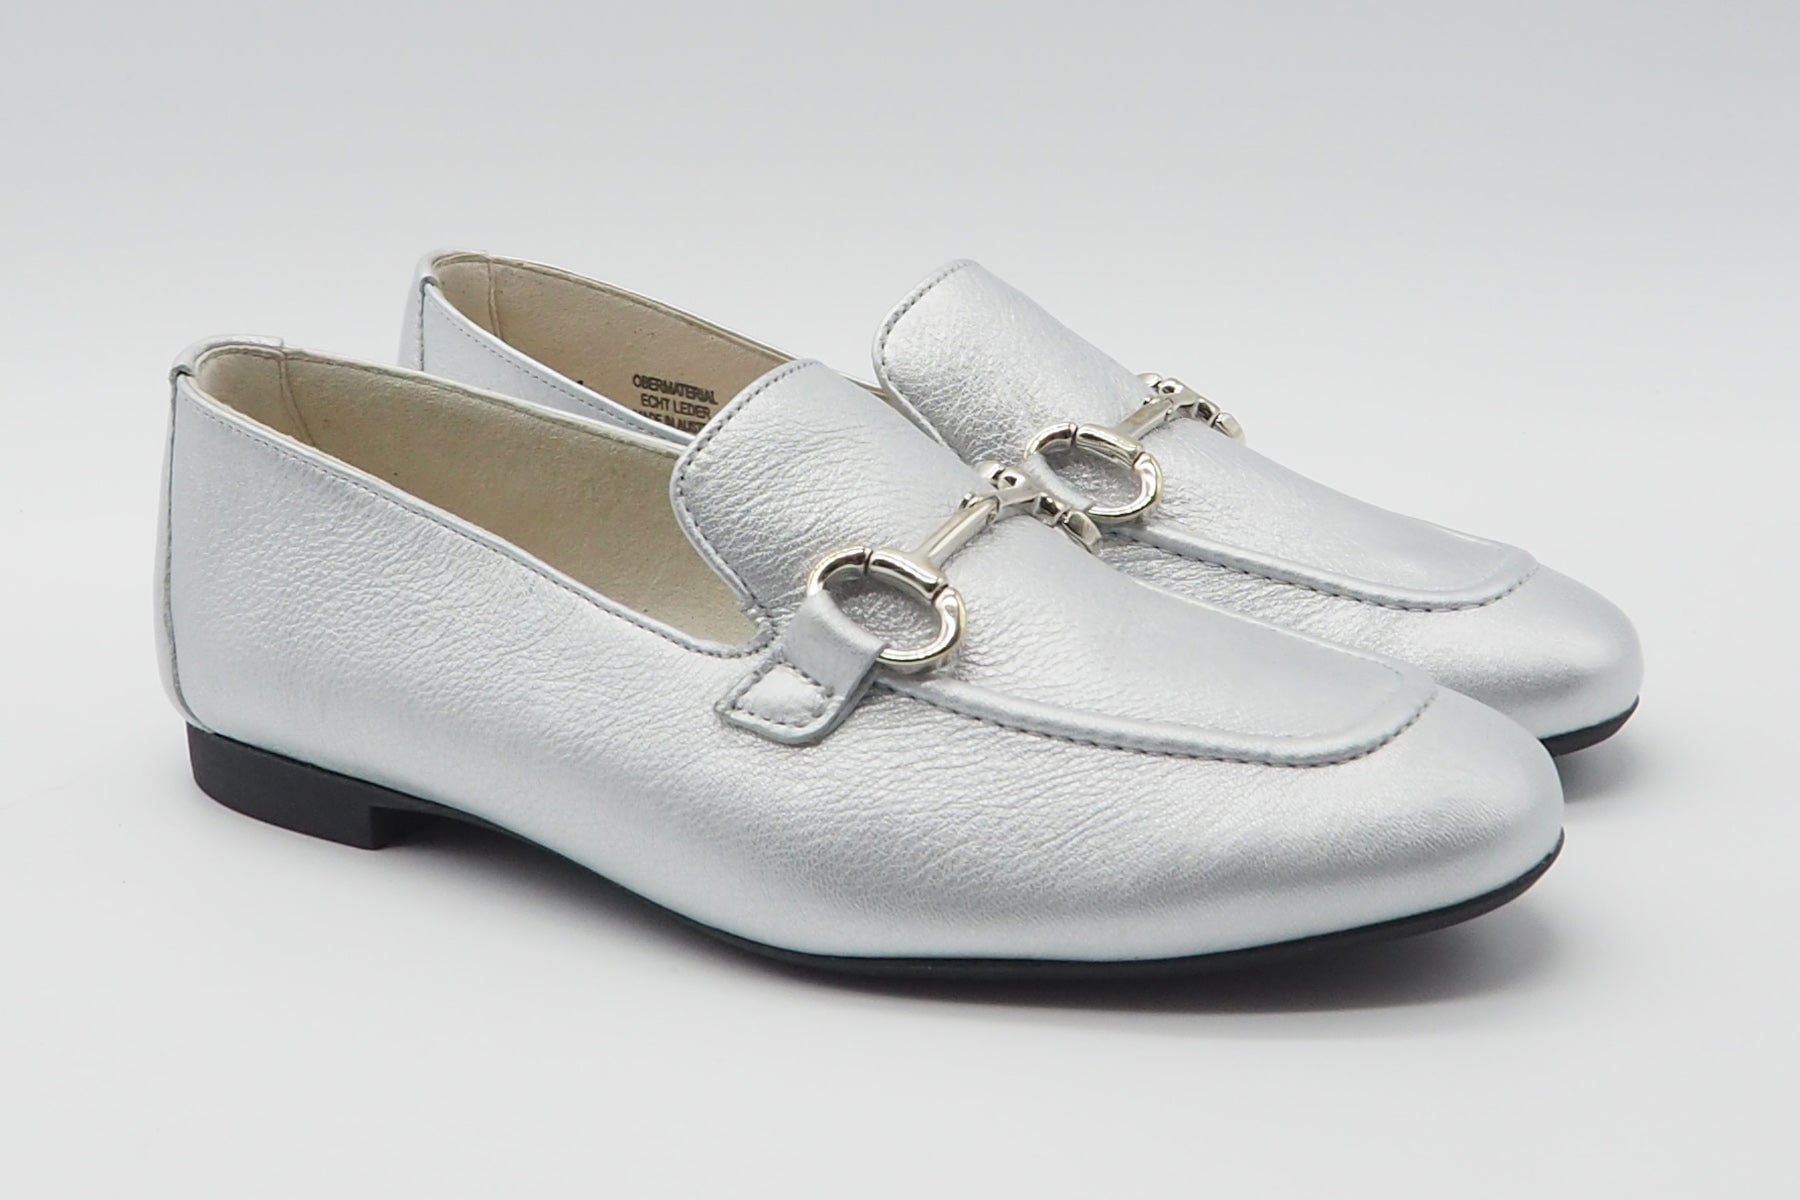 Edle Damen Loafer aus Metallicleder in Silber - Absatz 1,5cm Damen Loafers & Schnürer Paul Green 